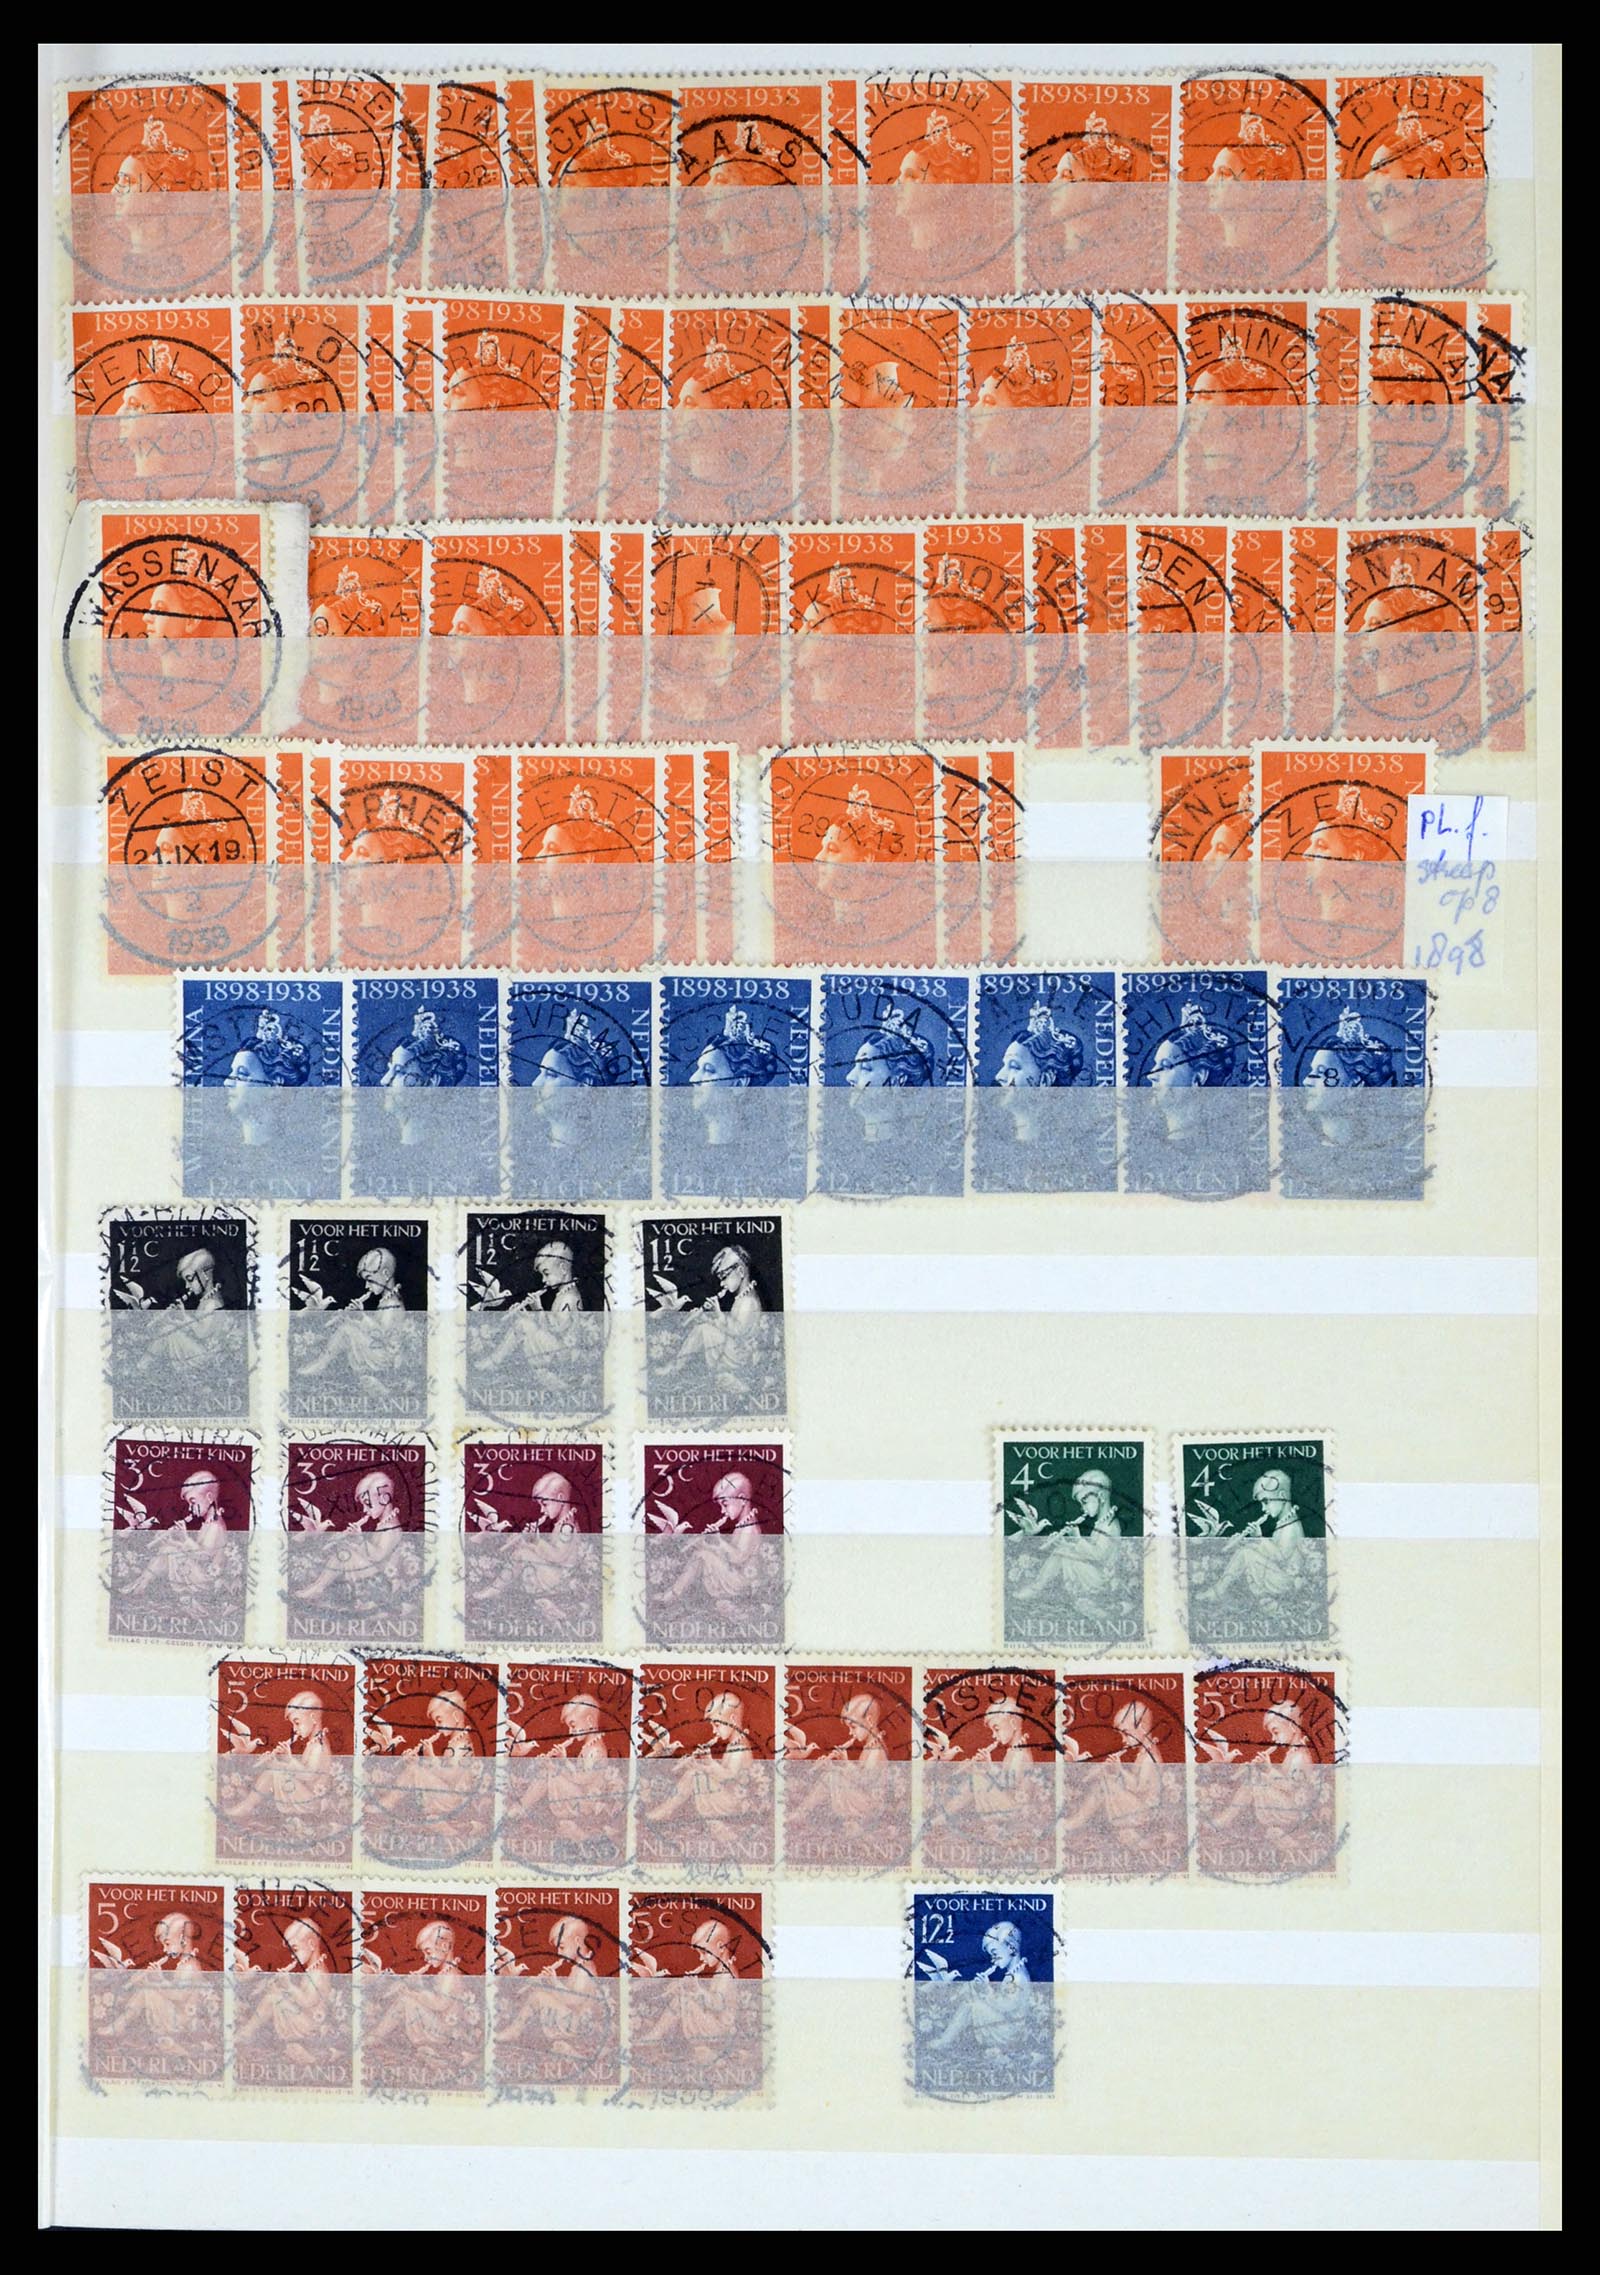 37424 025 - Stamp collection 37424 Netherlands shortbar cancels.